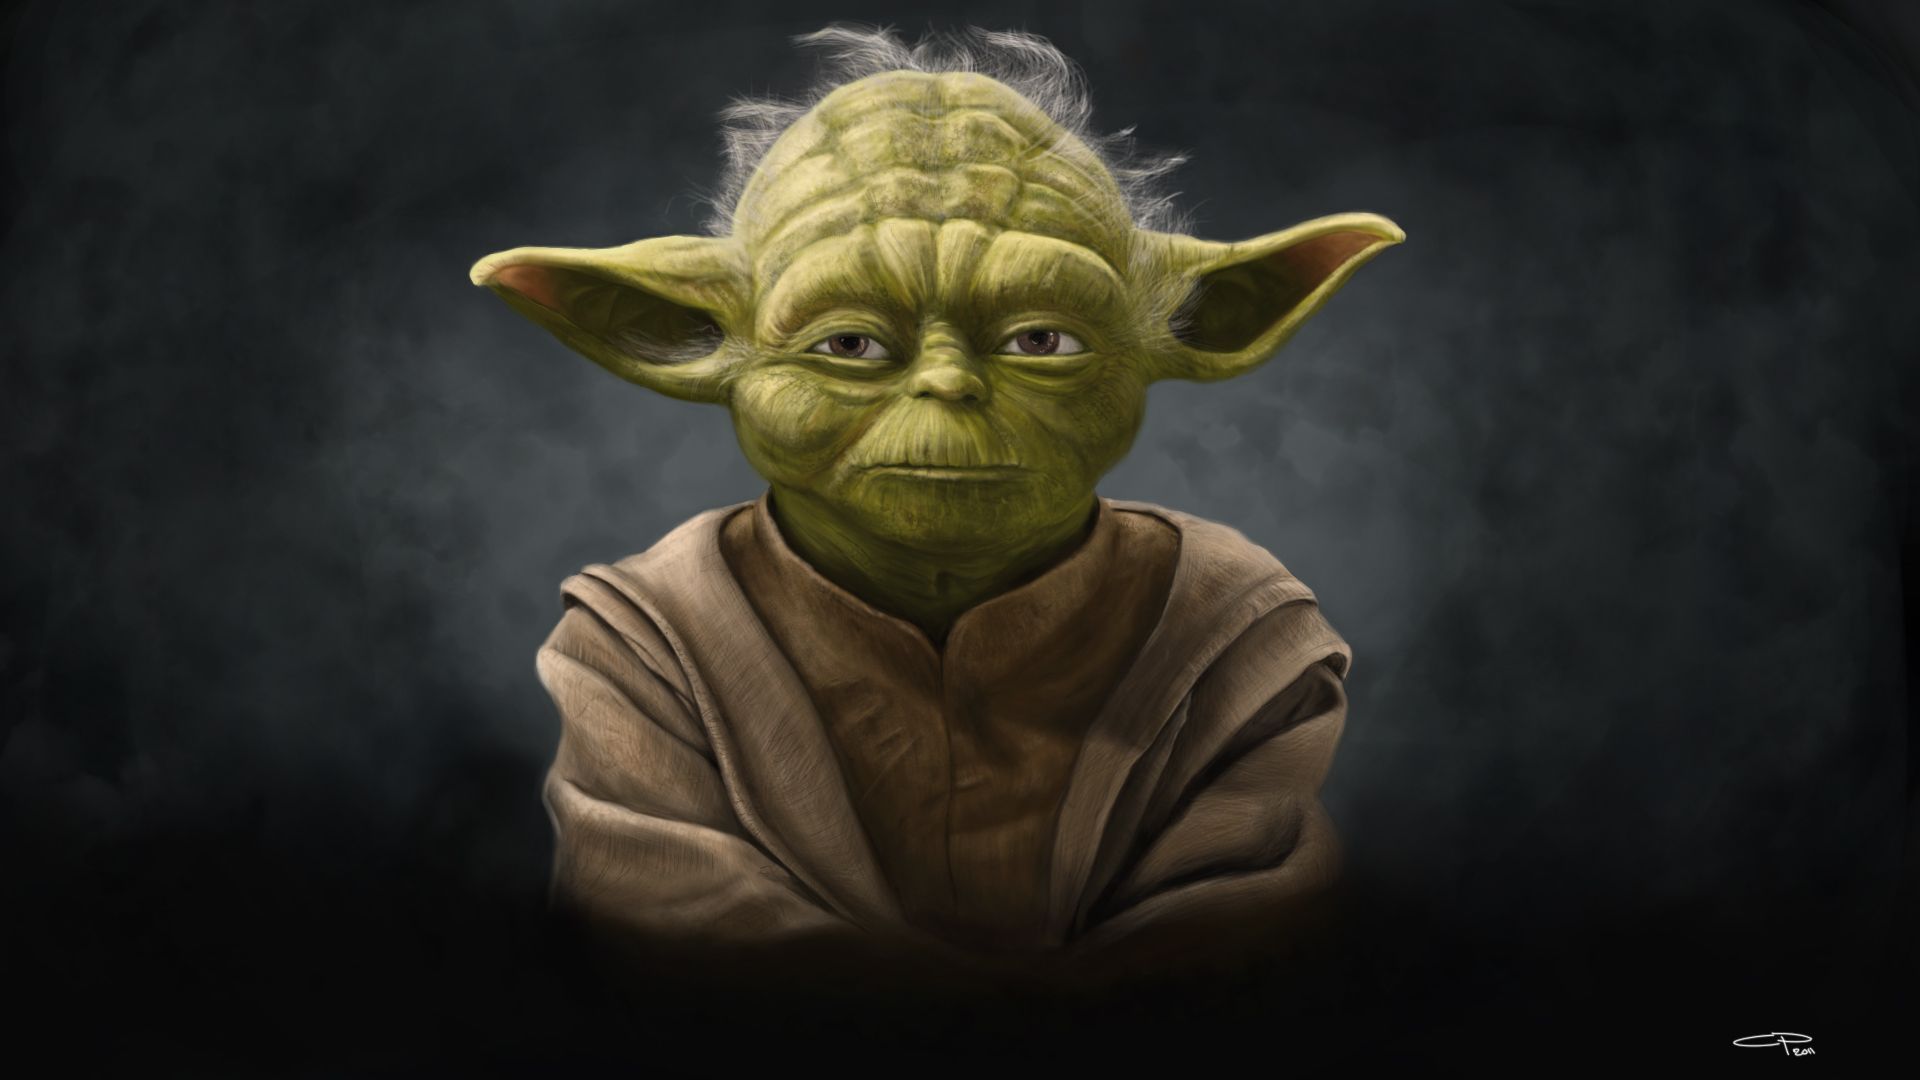 Yoda Wallpaperx1080. Yoda wallpaper, Yoda, Star wars party games